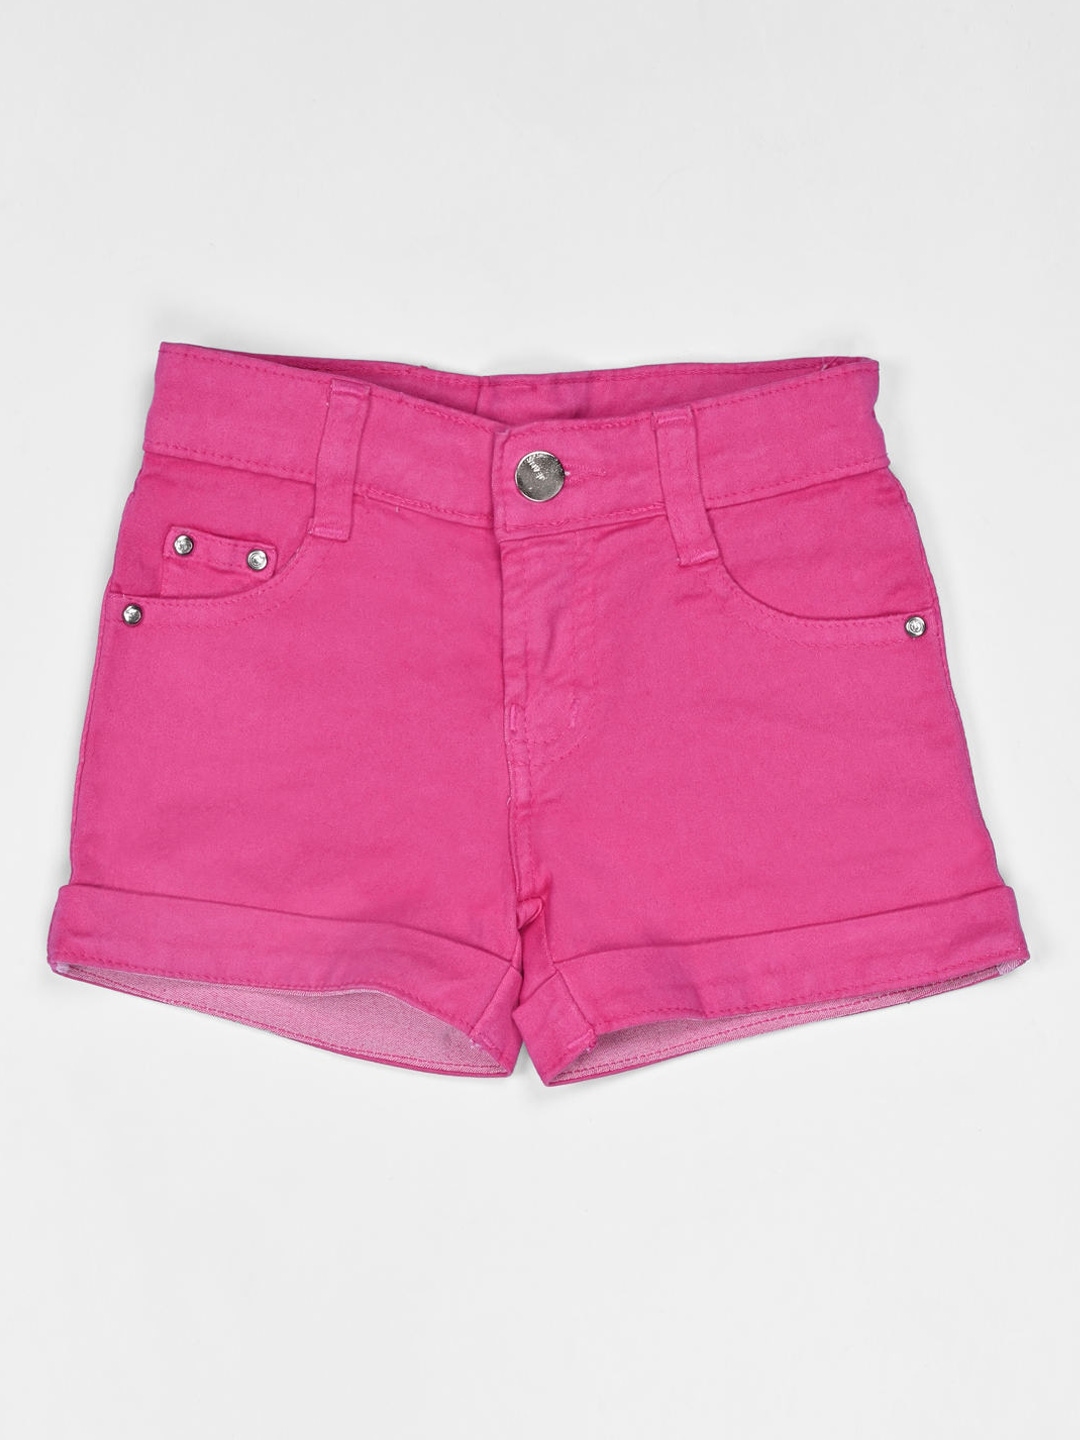 Buy ZOLA Girls Pink Denim Shorts - Shorts for Girls 15922158 | Myntra